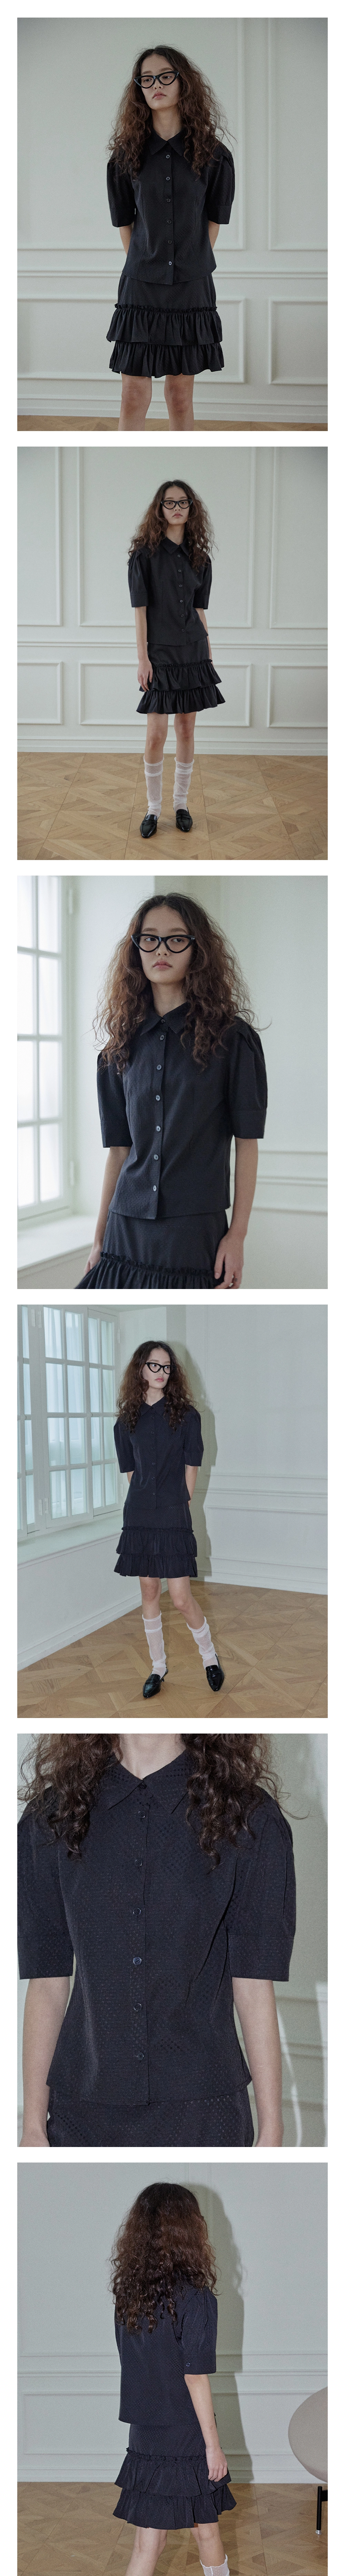 Girls uniform shirt / Black